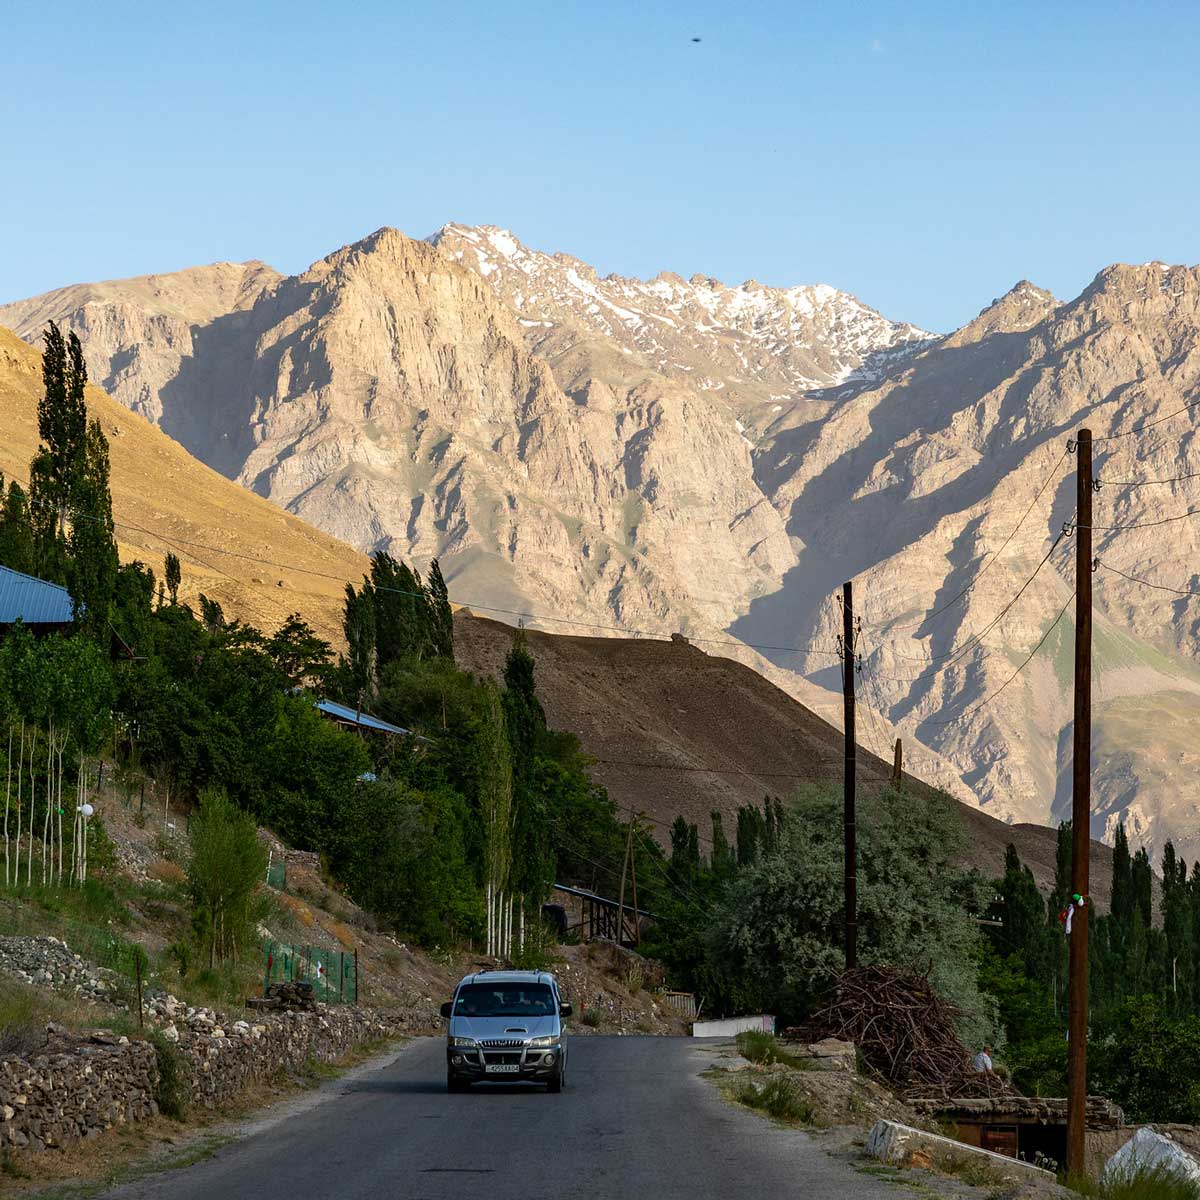 Самый лучший speed up кишлак. \Памир Хорог Таджикистан. Кишлаки на памире в Таджикистане. Горный Бадахшан Хорог. Горы Памира Хорог.